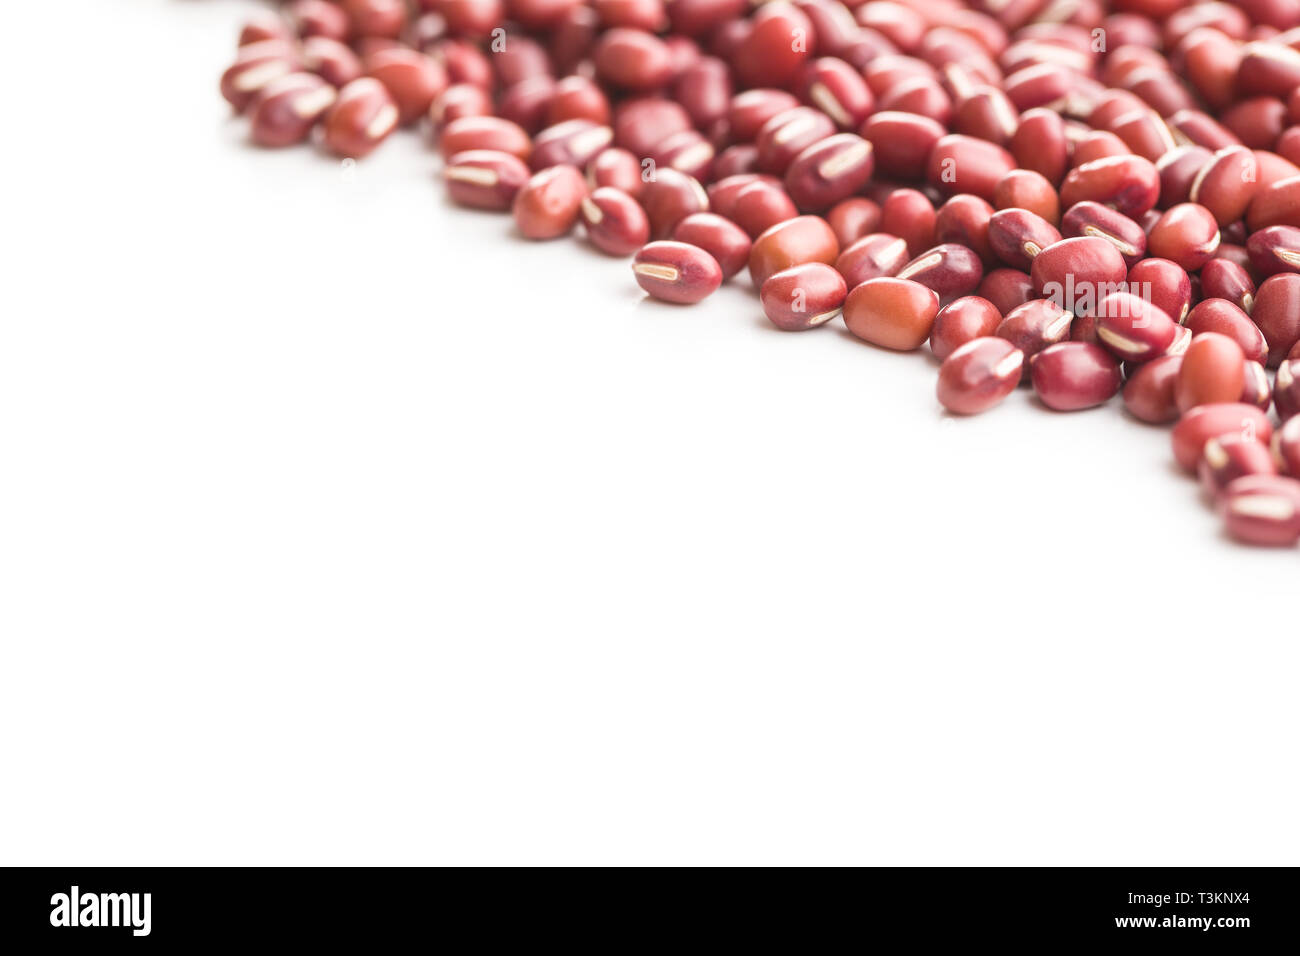 Red adzuki beans isolated on white background. Stock Photo